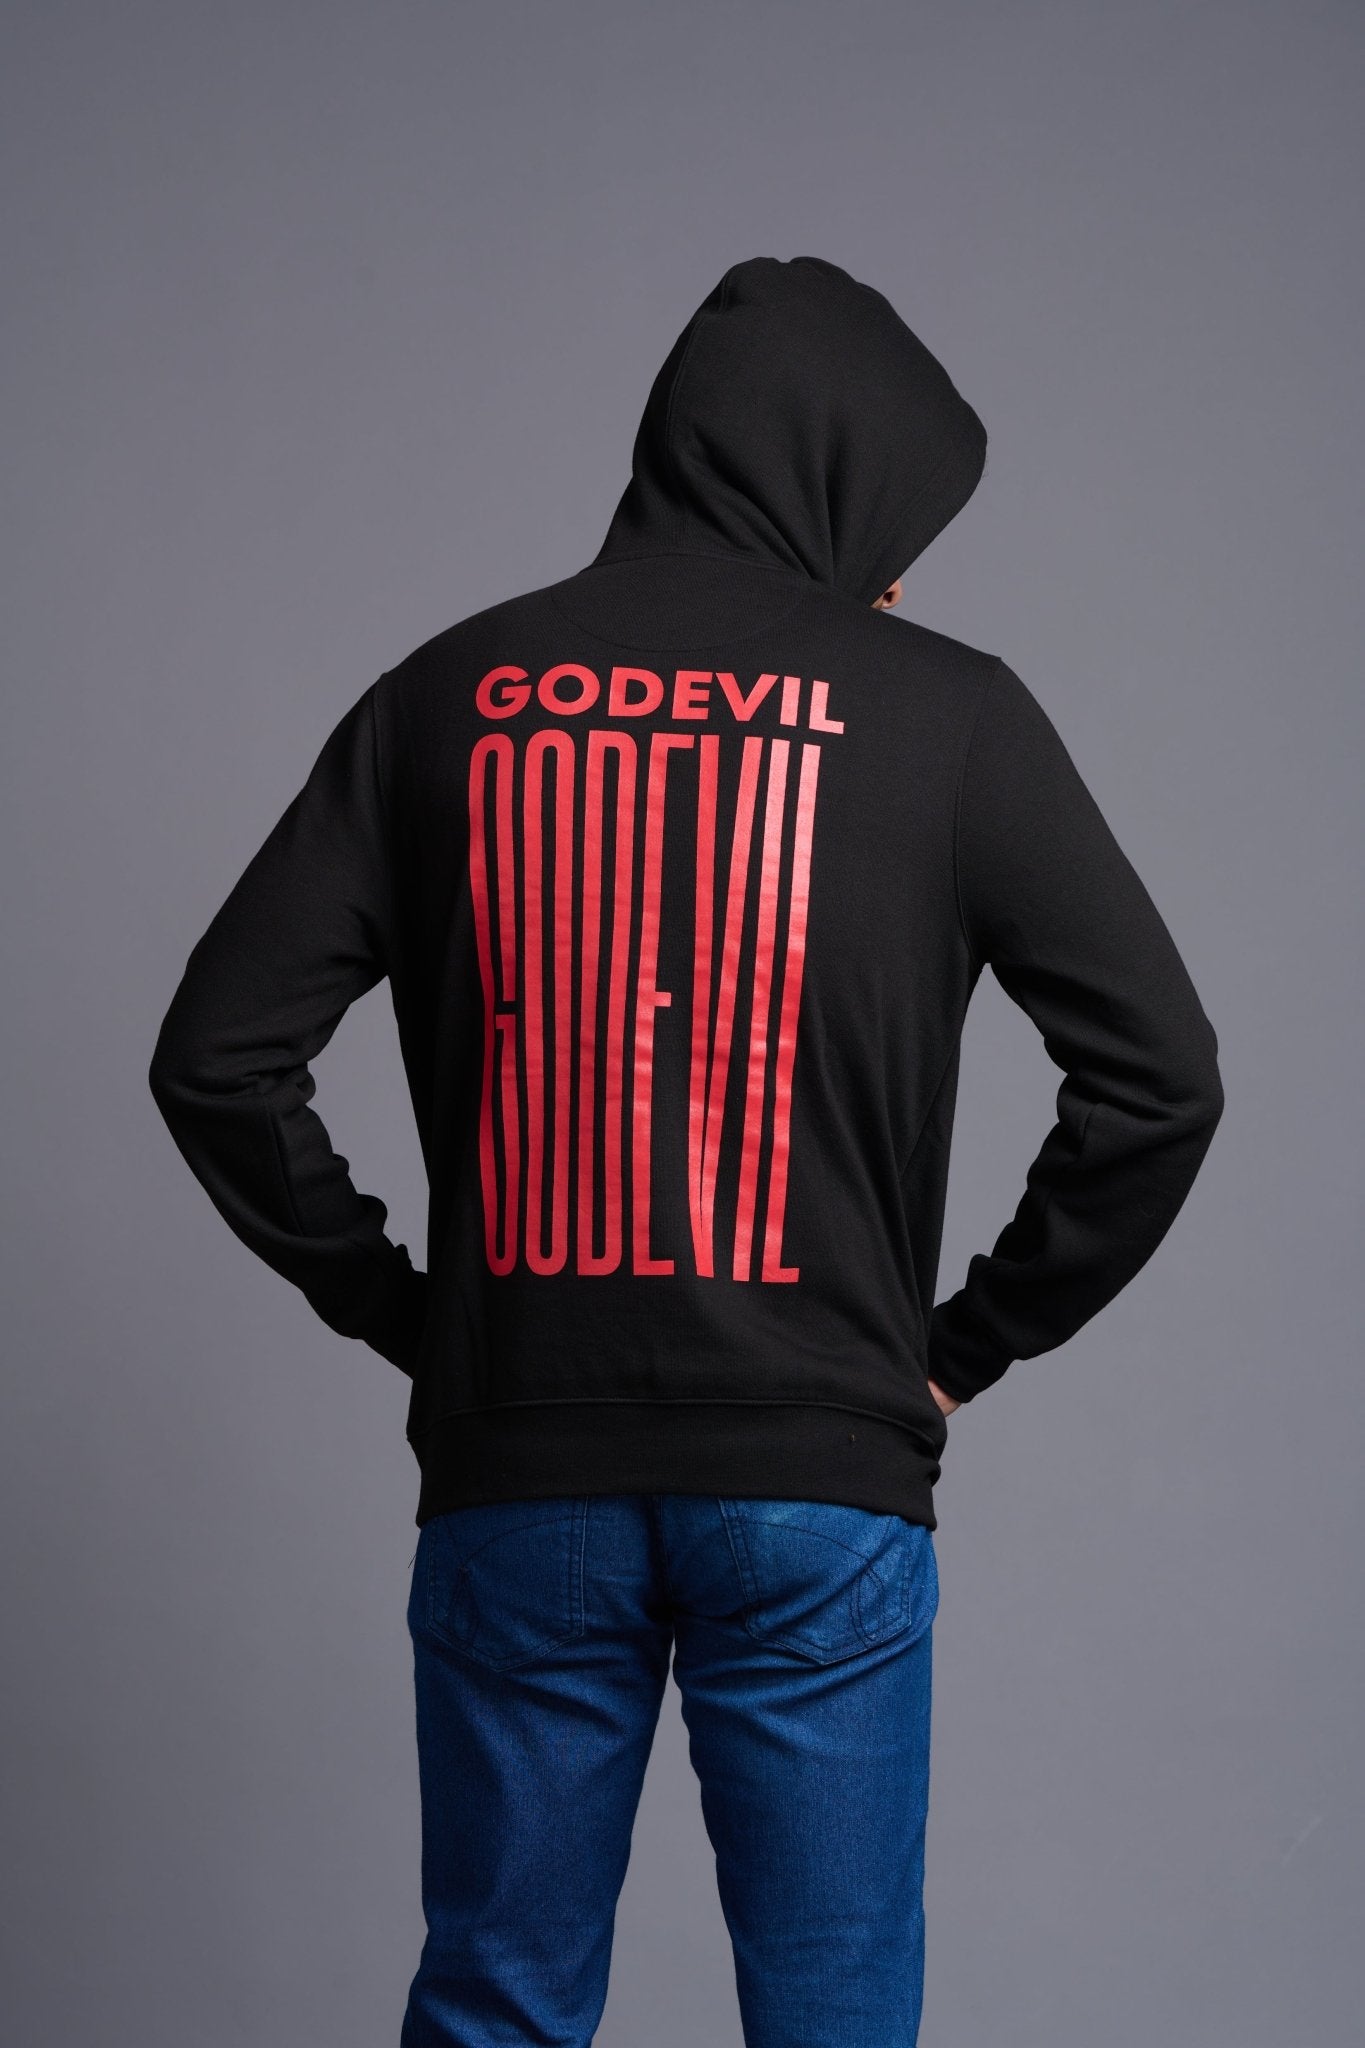 Go Devil in Stretch Font Printed Black Hoodie for Men - Go Devil